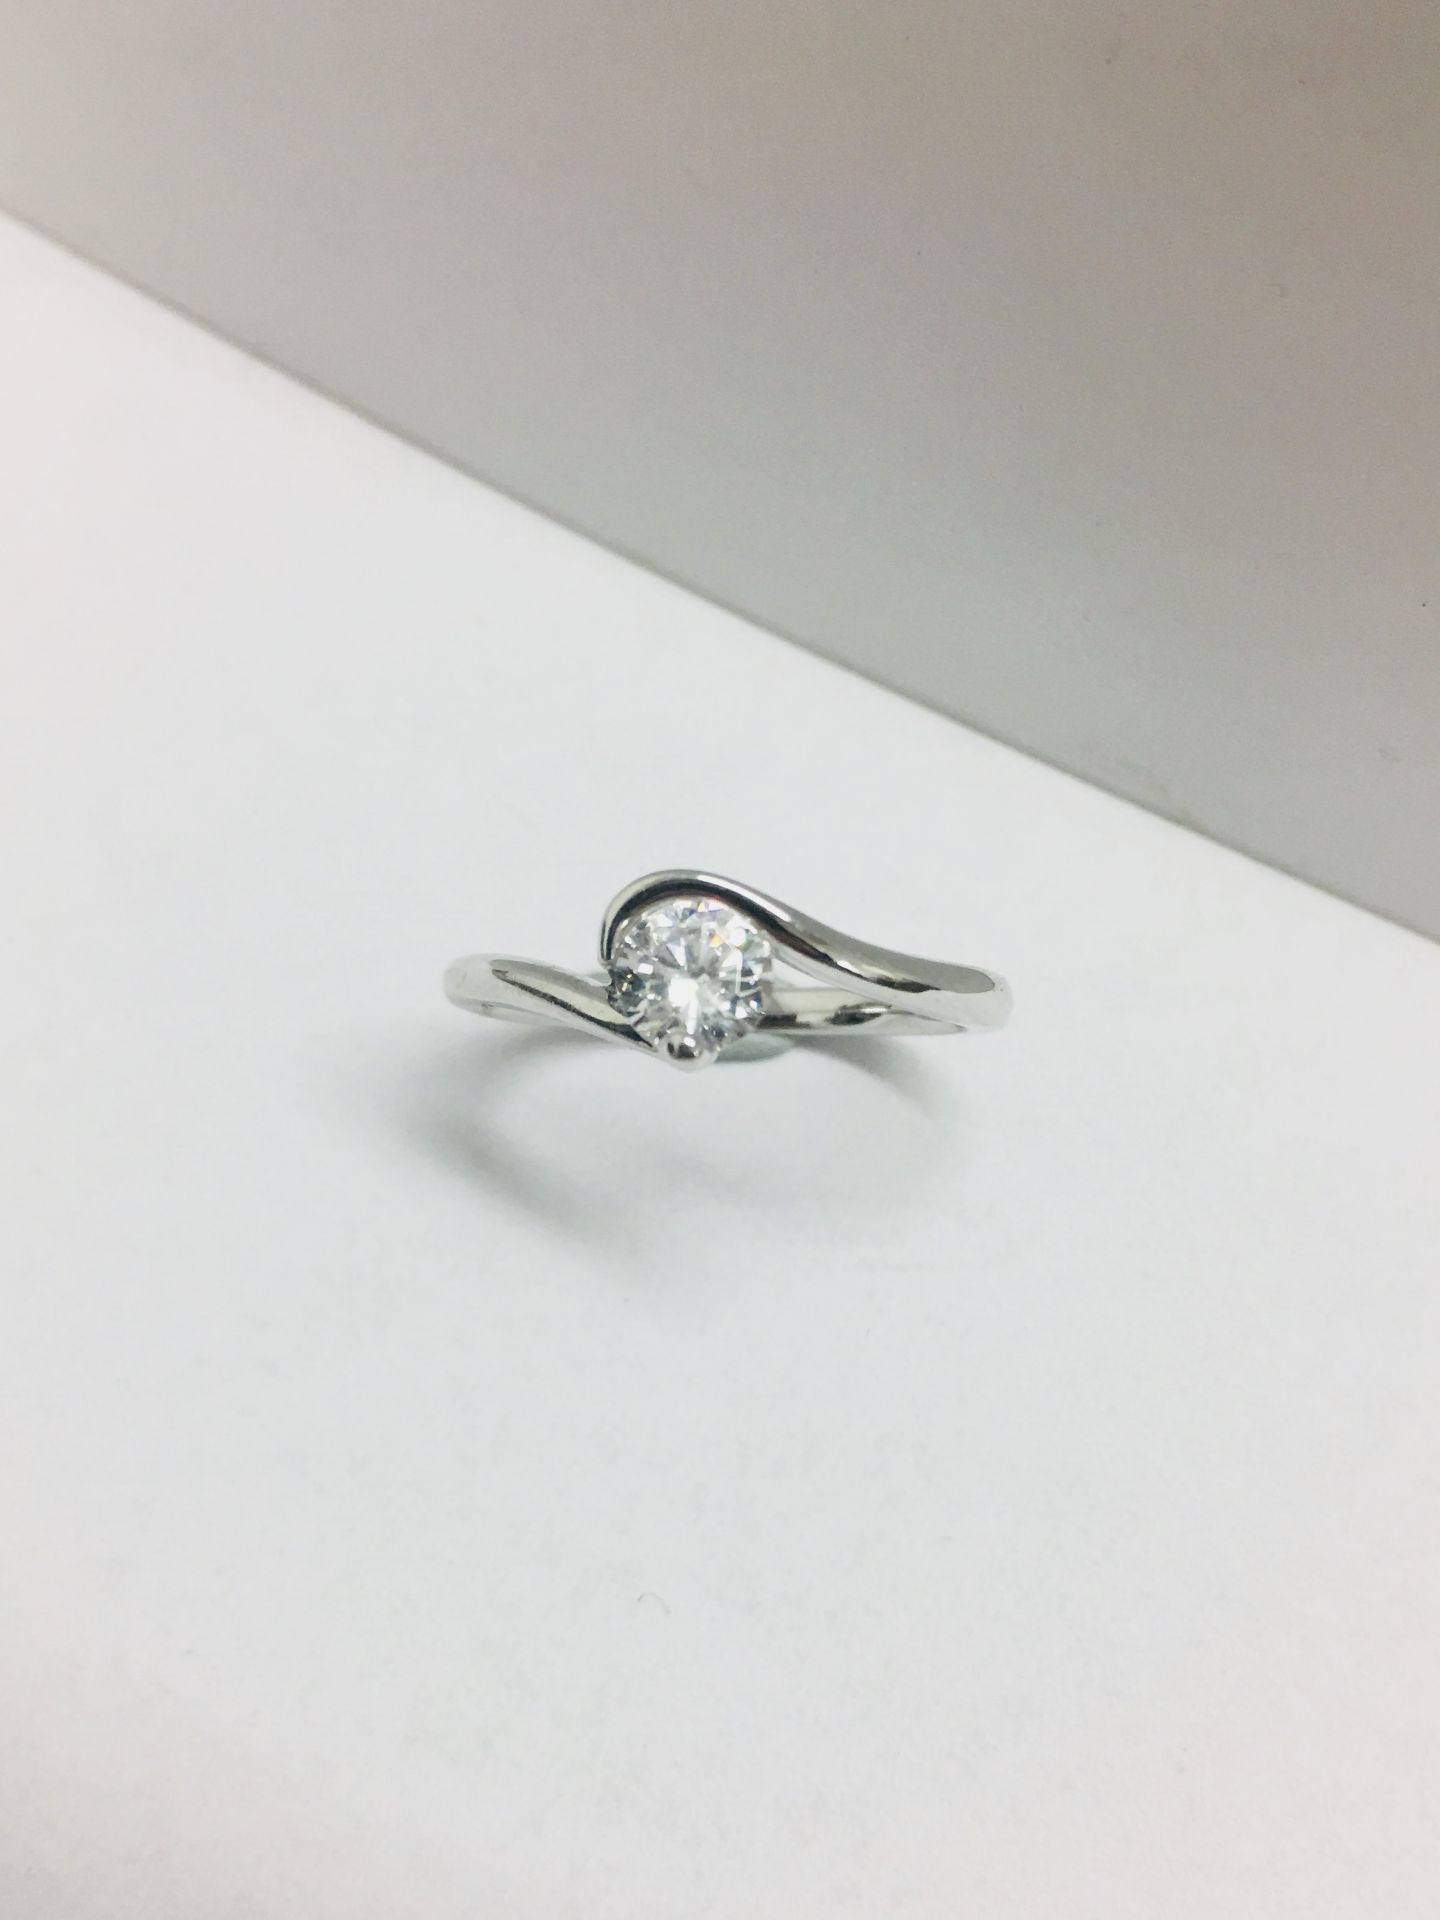 Platinum twist style diamond solitaire ring,0.50ct D colour vs clarity diamond,4.68gms platinum,uk - Image 4 of 7